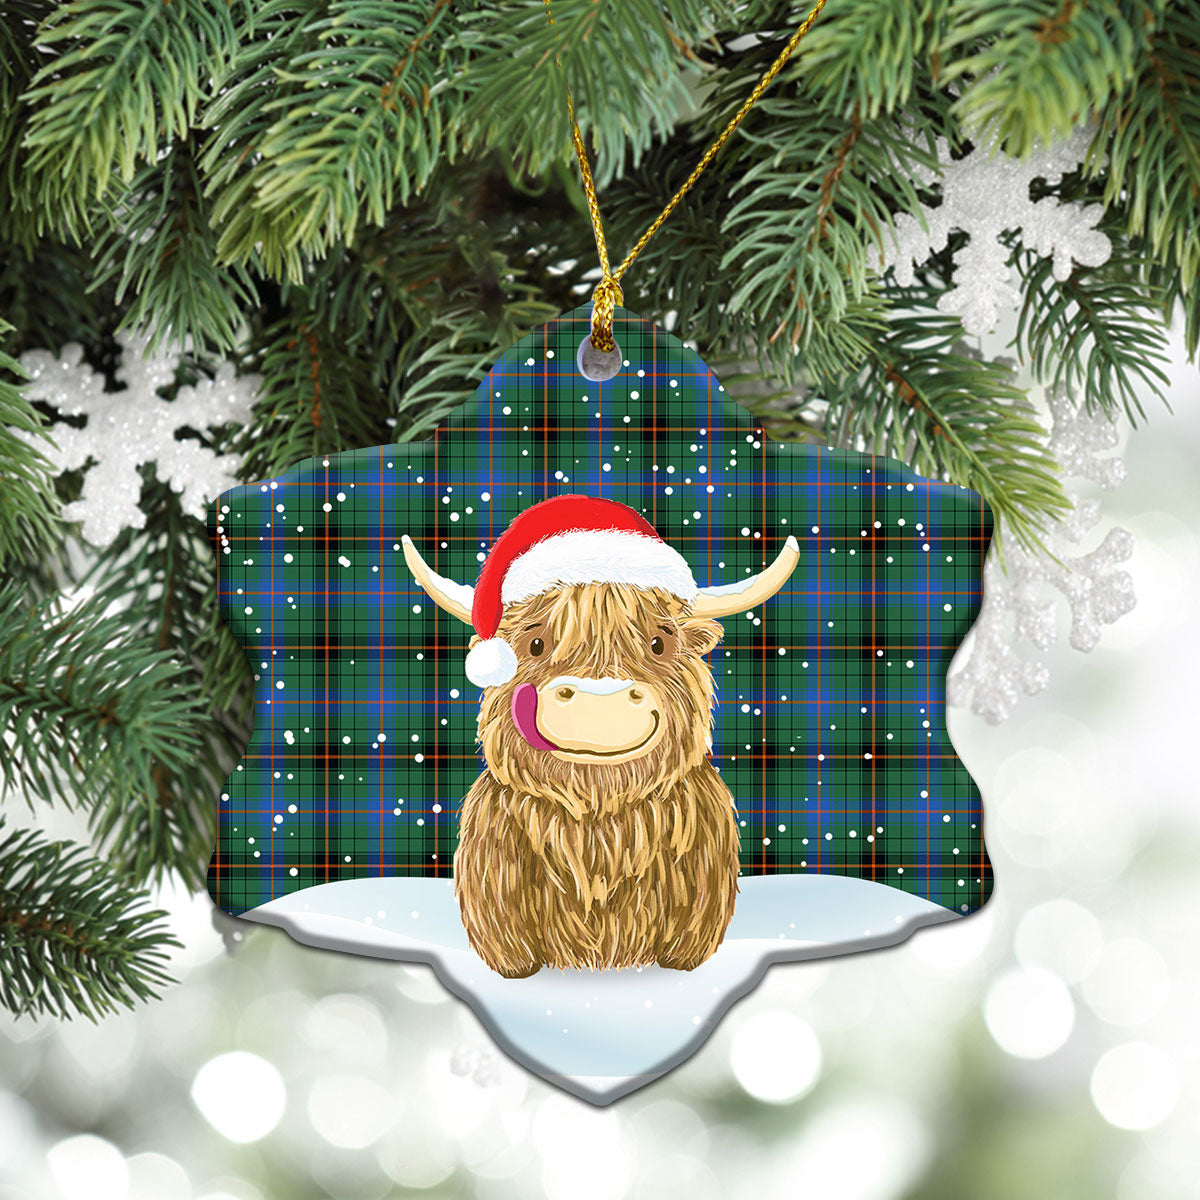 Davidson Ancient Tartan Christmas Ceramic Ornament - Highland Cows Style